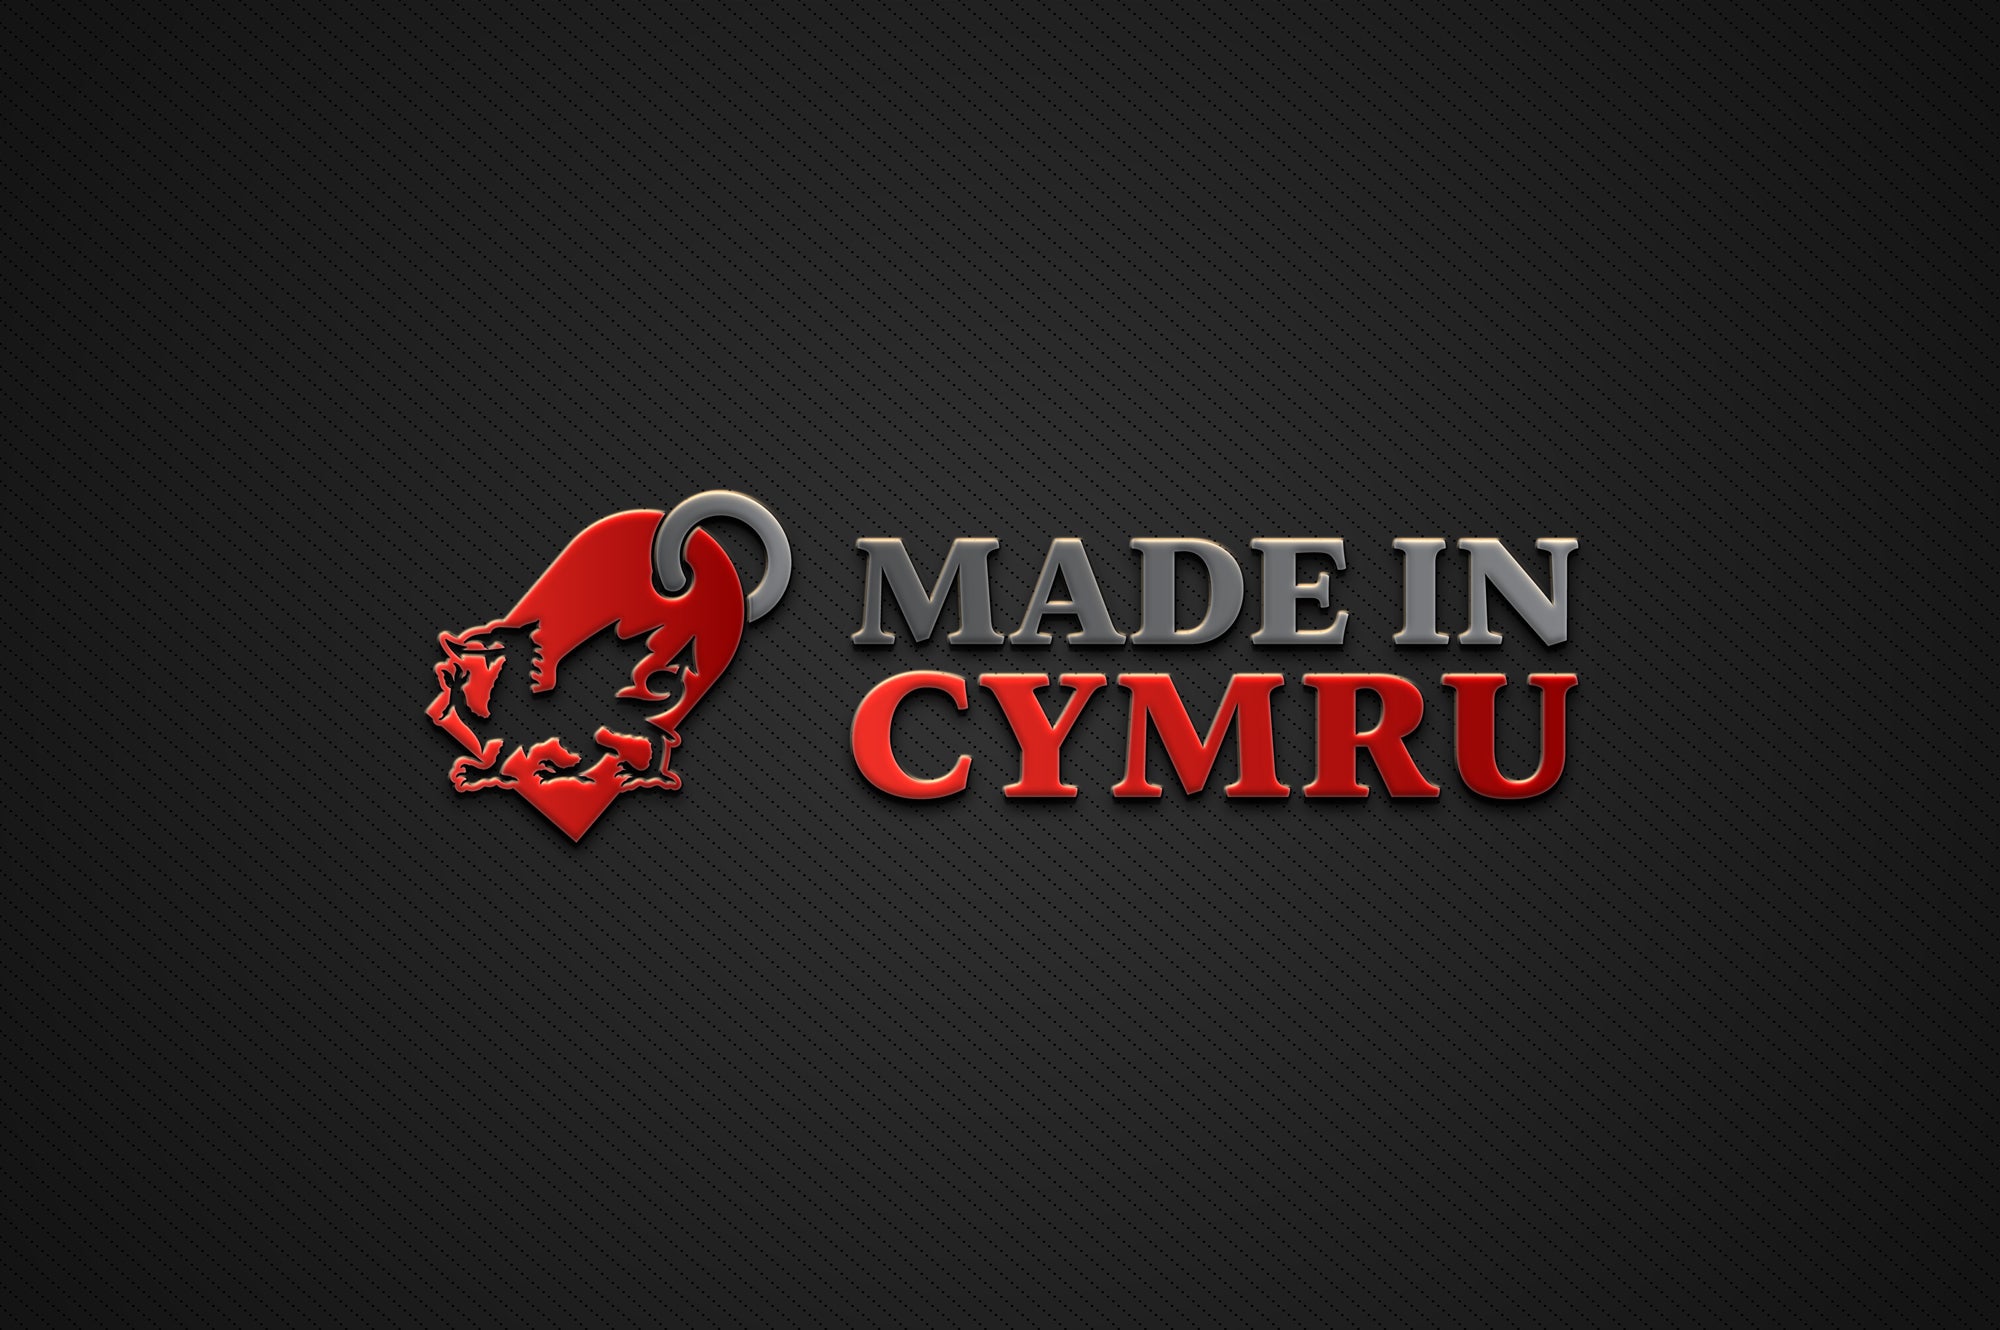 Introducing the new Made in Cymru Logo